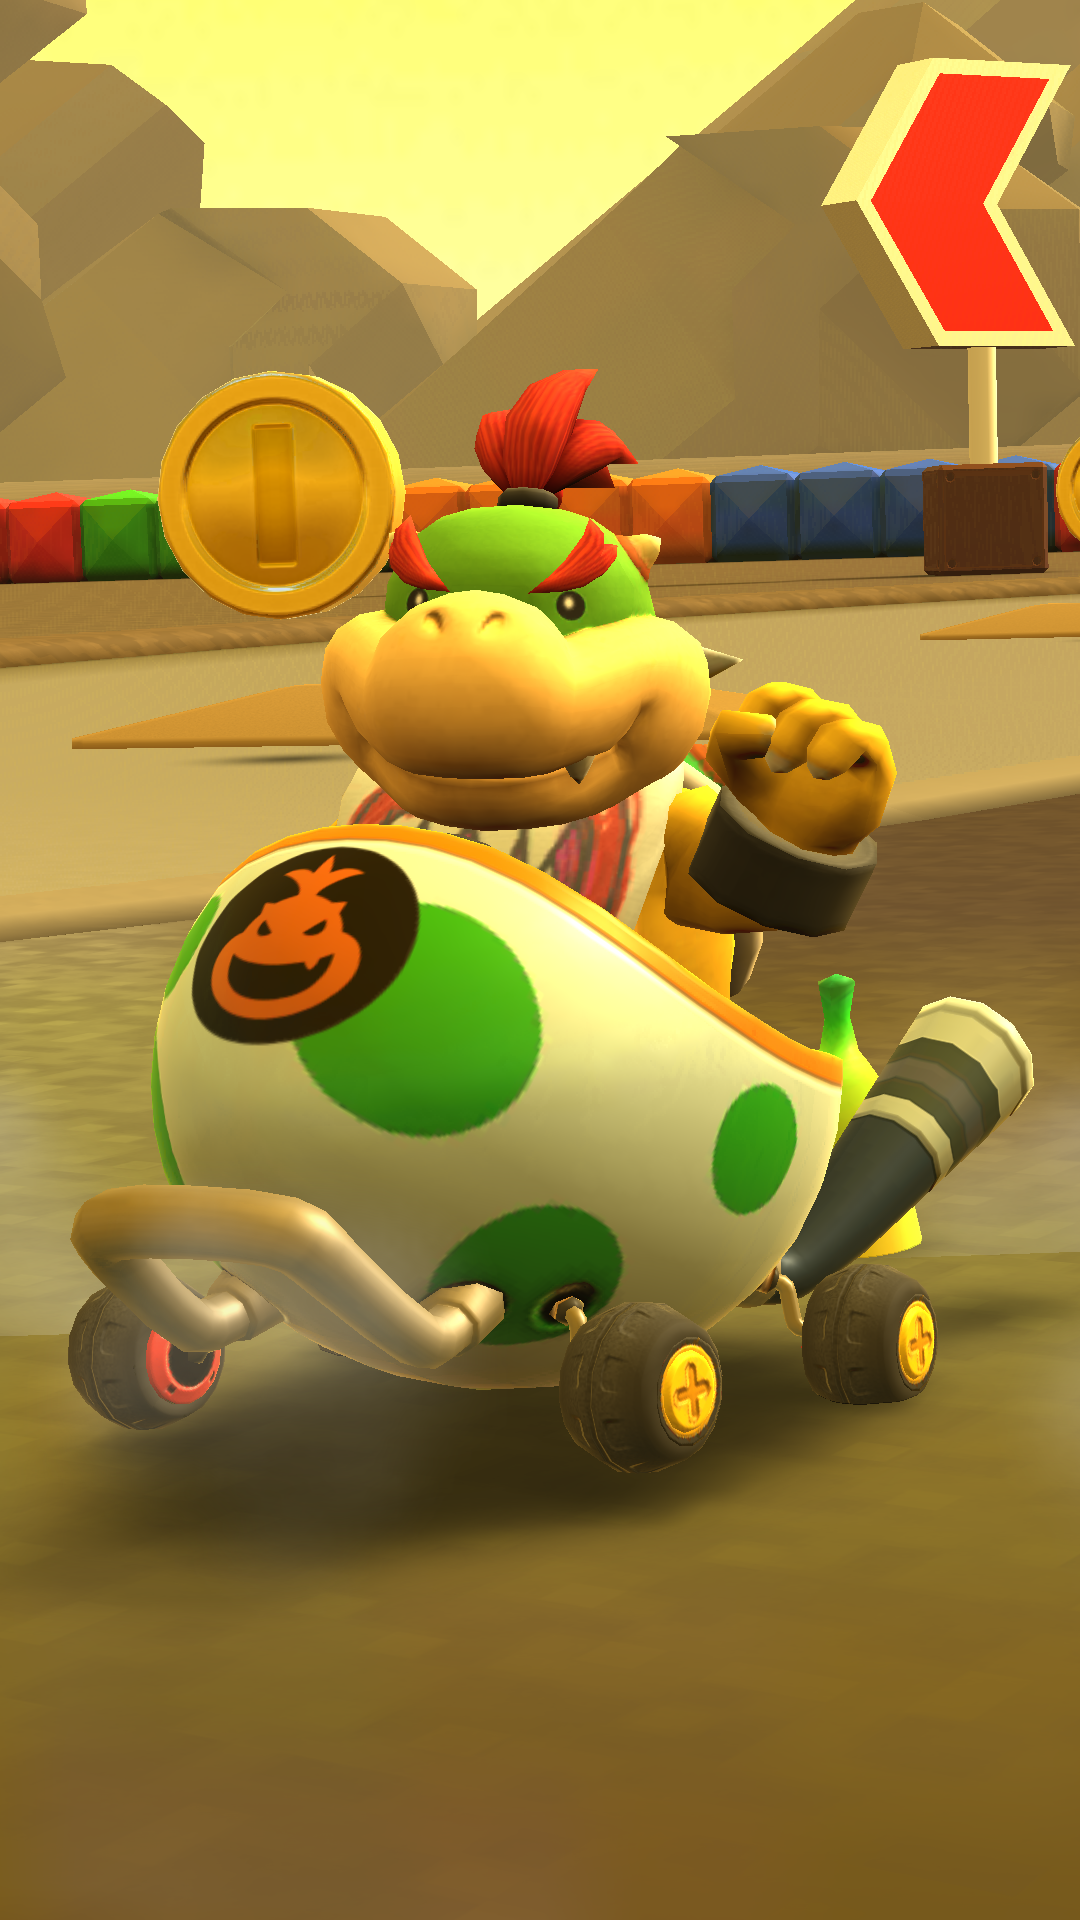 Bowser Jr. (Mario Kart 8 Deluxe) by Rubychu96 on DeviantArt